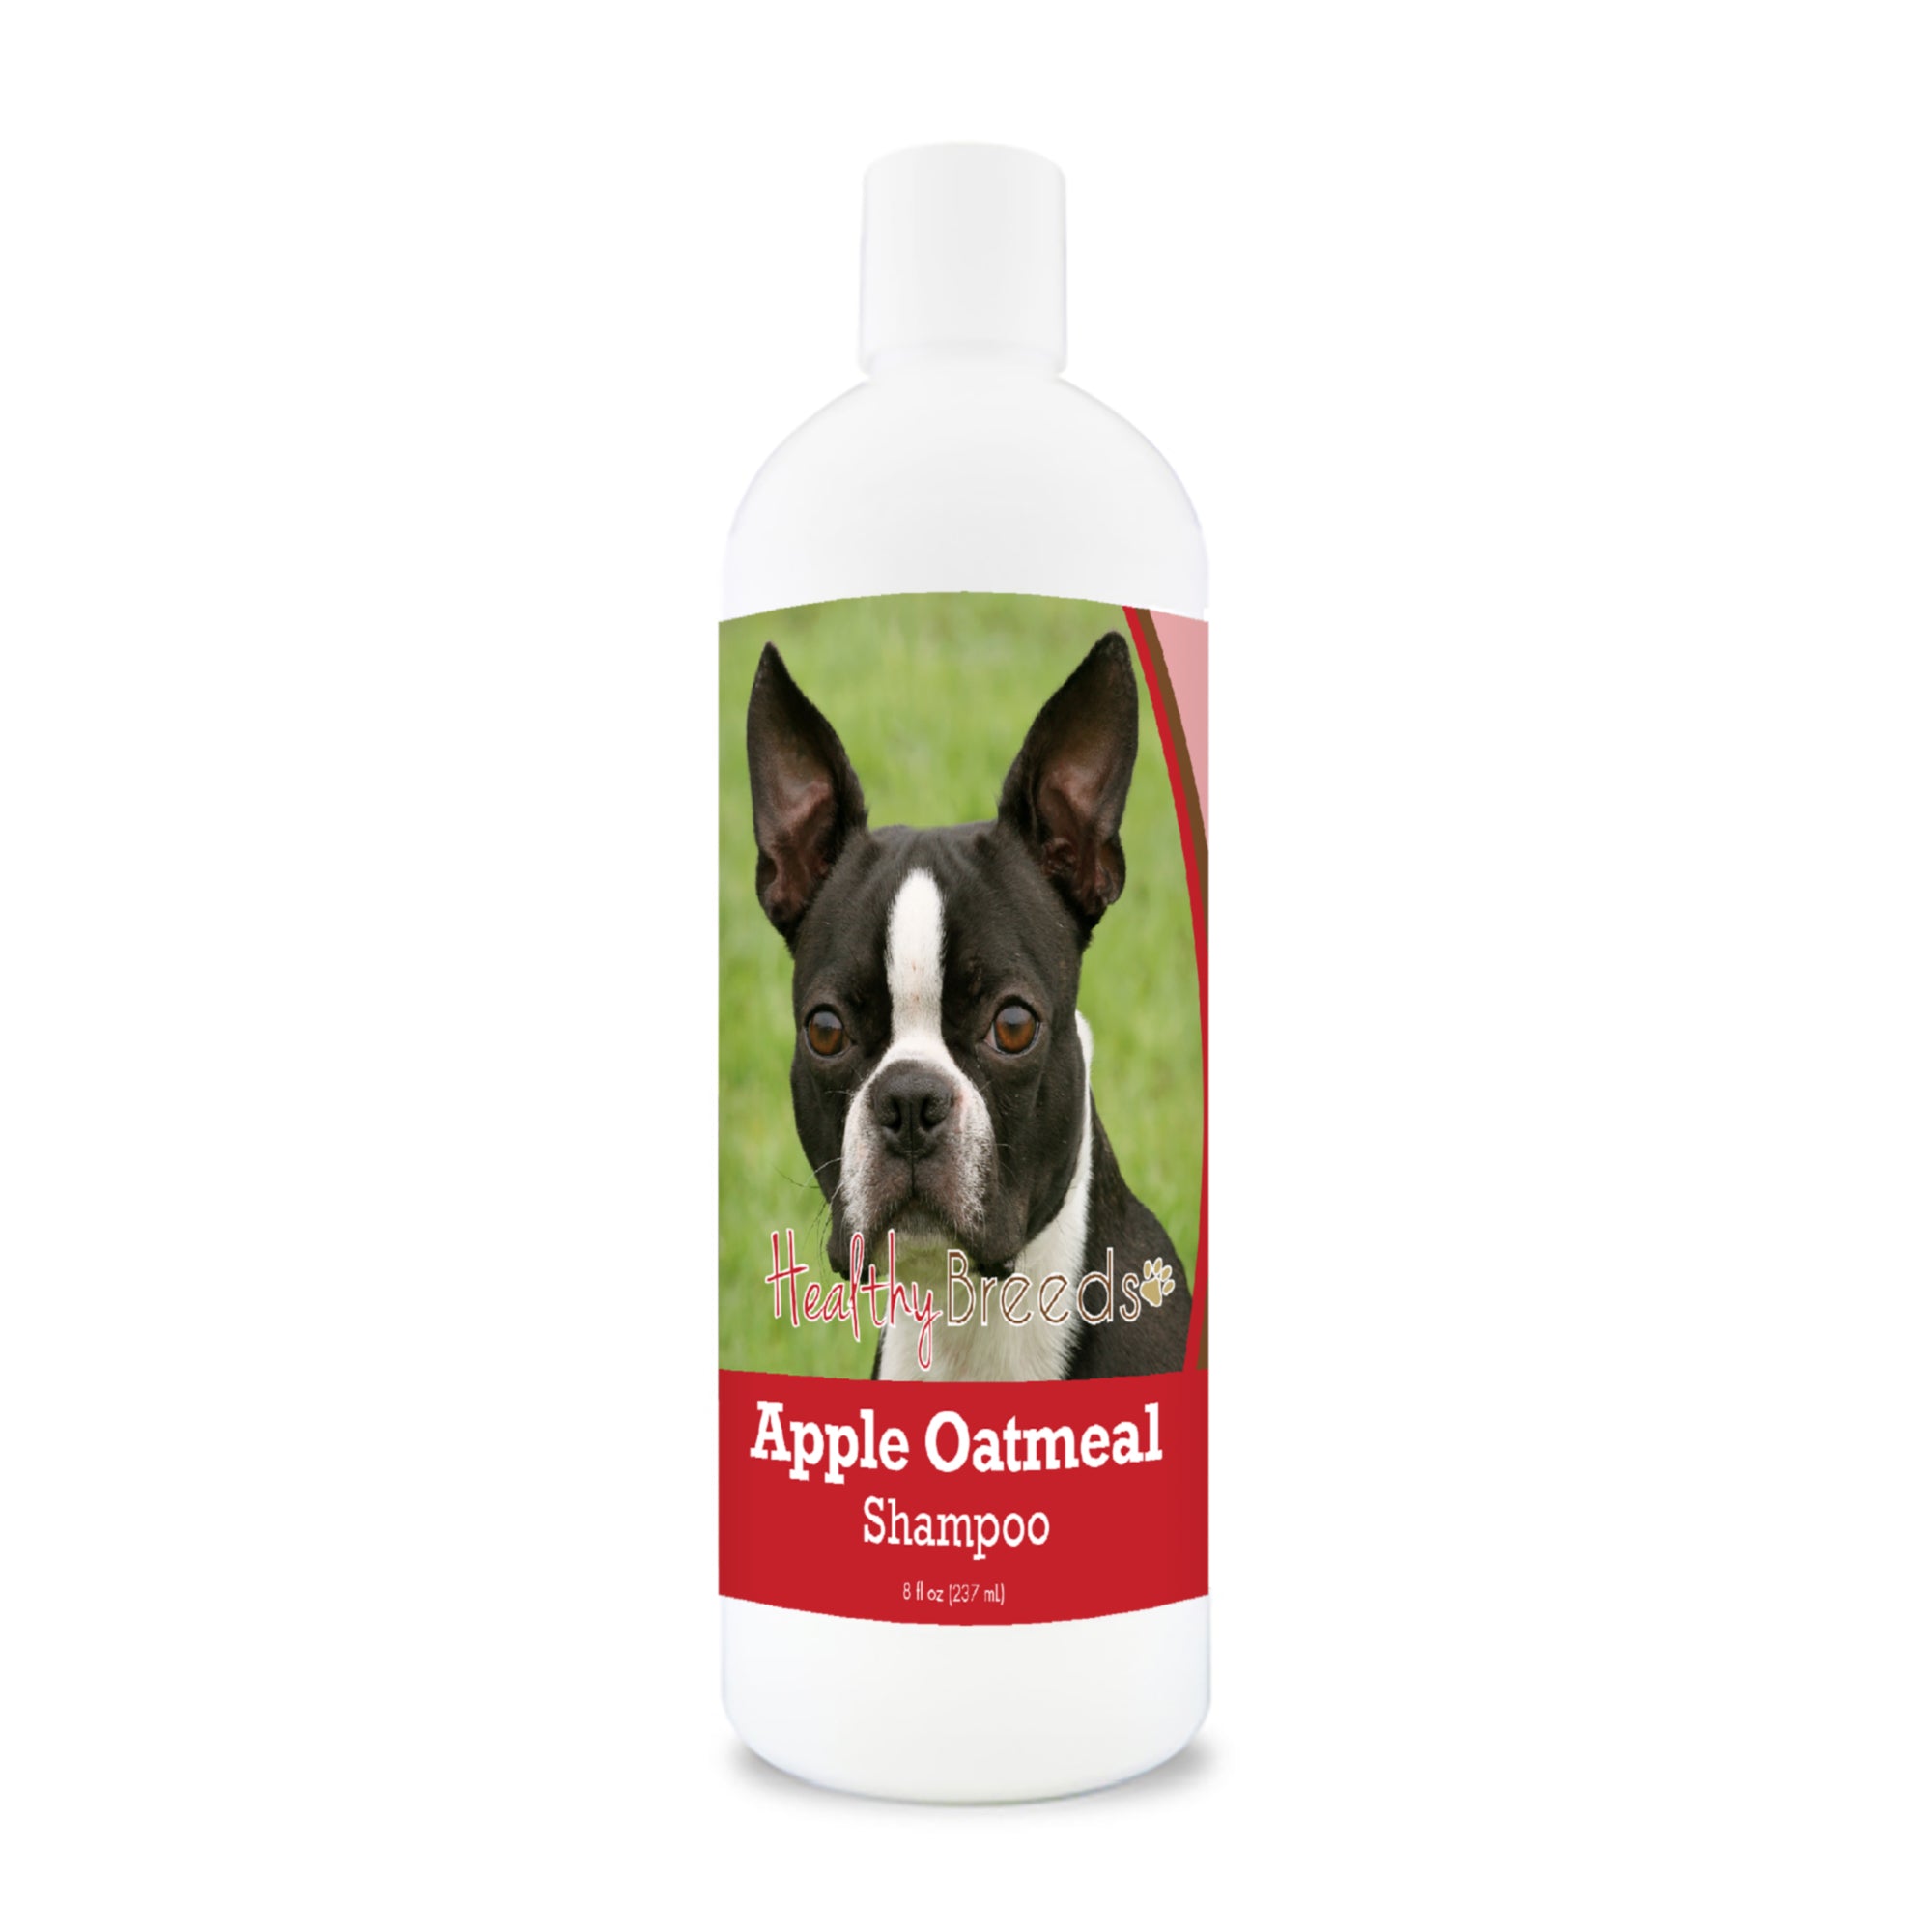 Boston Terrier Apple Oatmeal Shampoo 8 oz